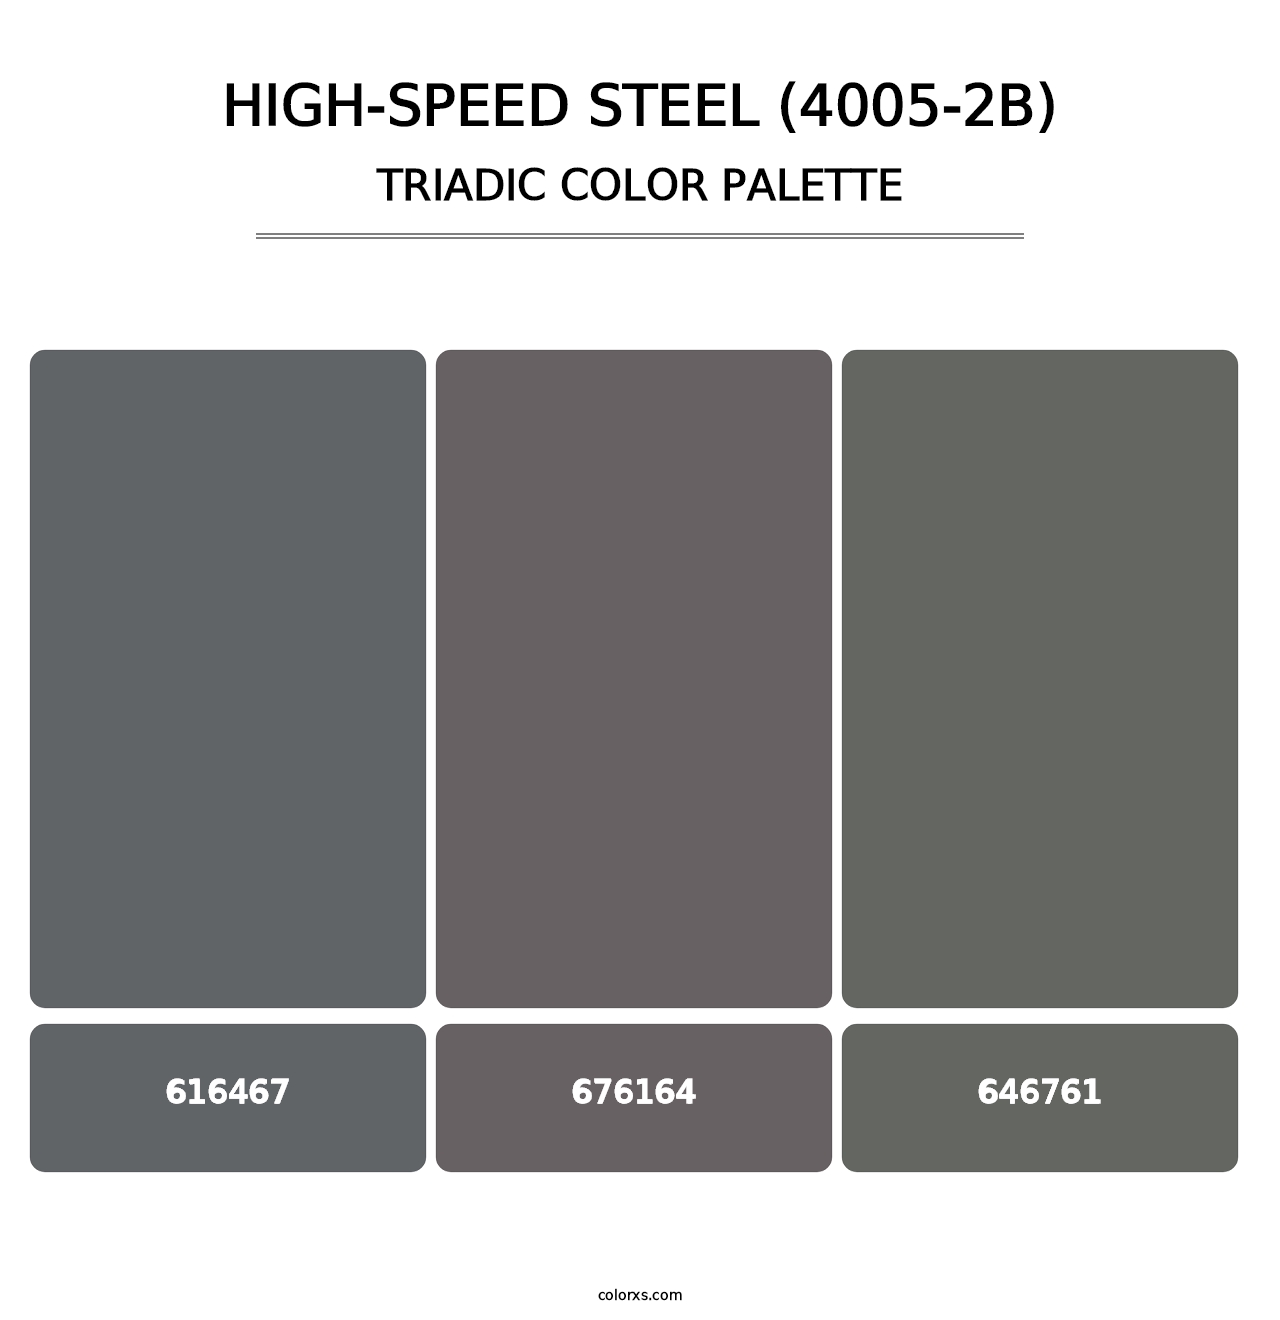 High-Speed Steel (4005-2B) - Triadic Color Palette